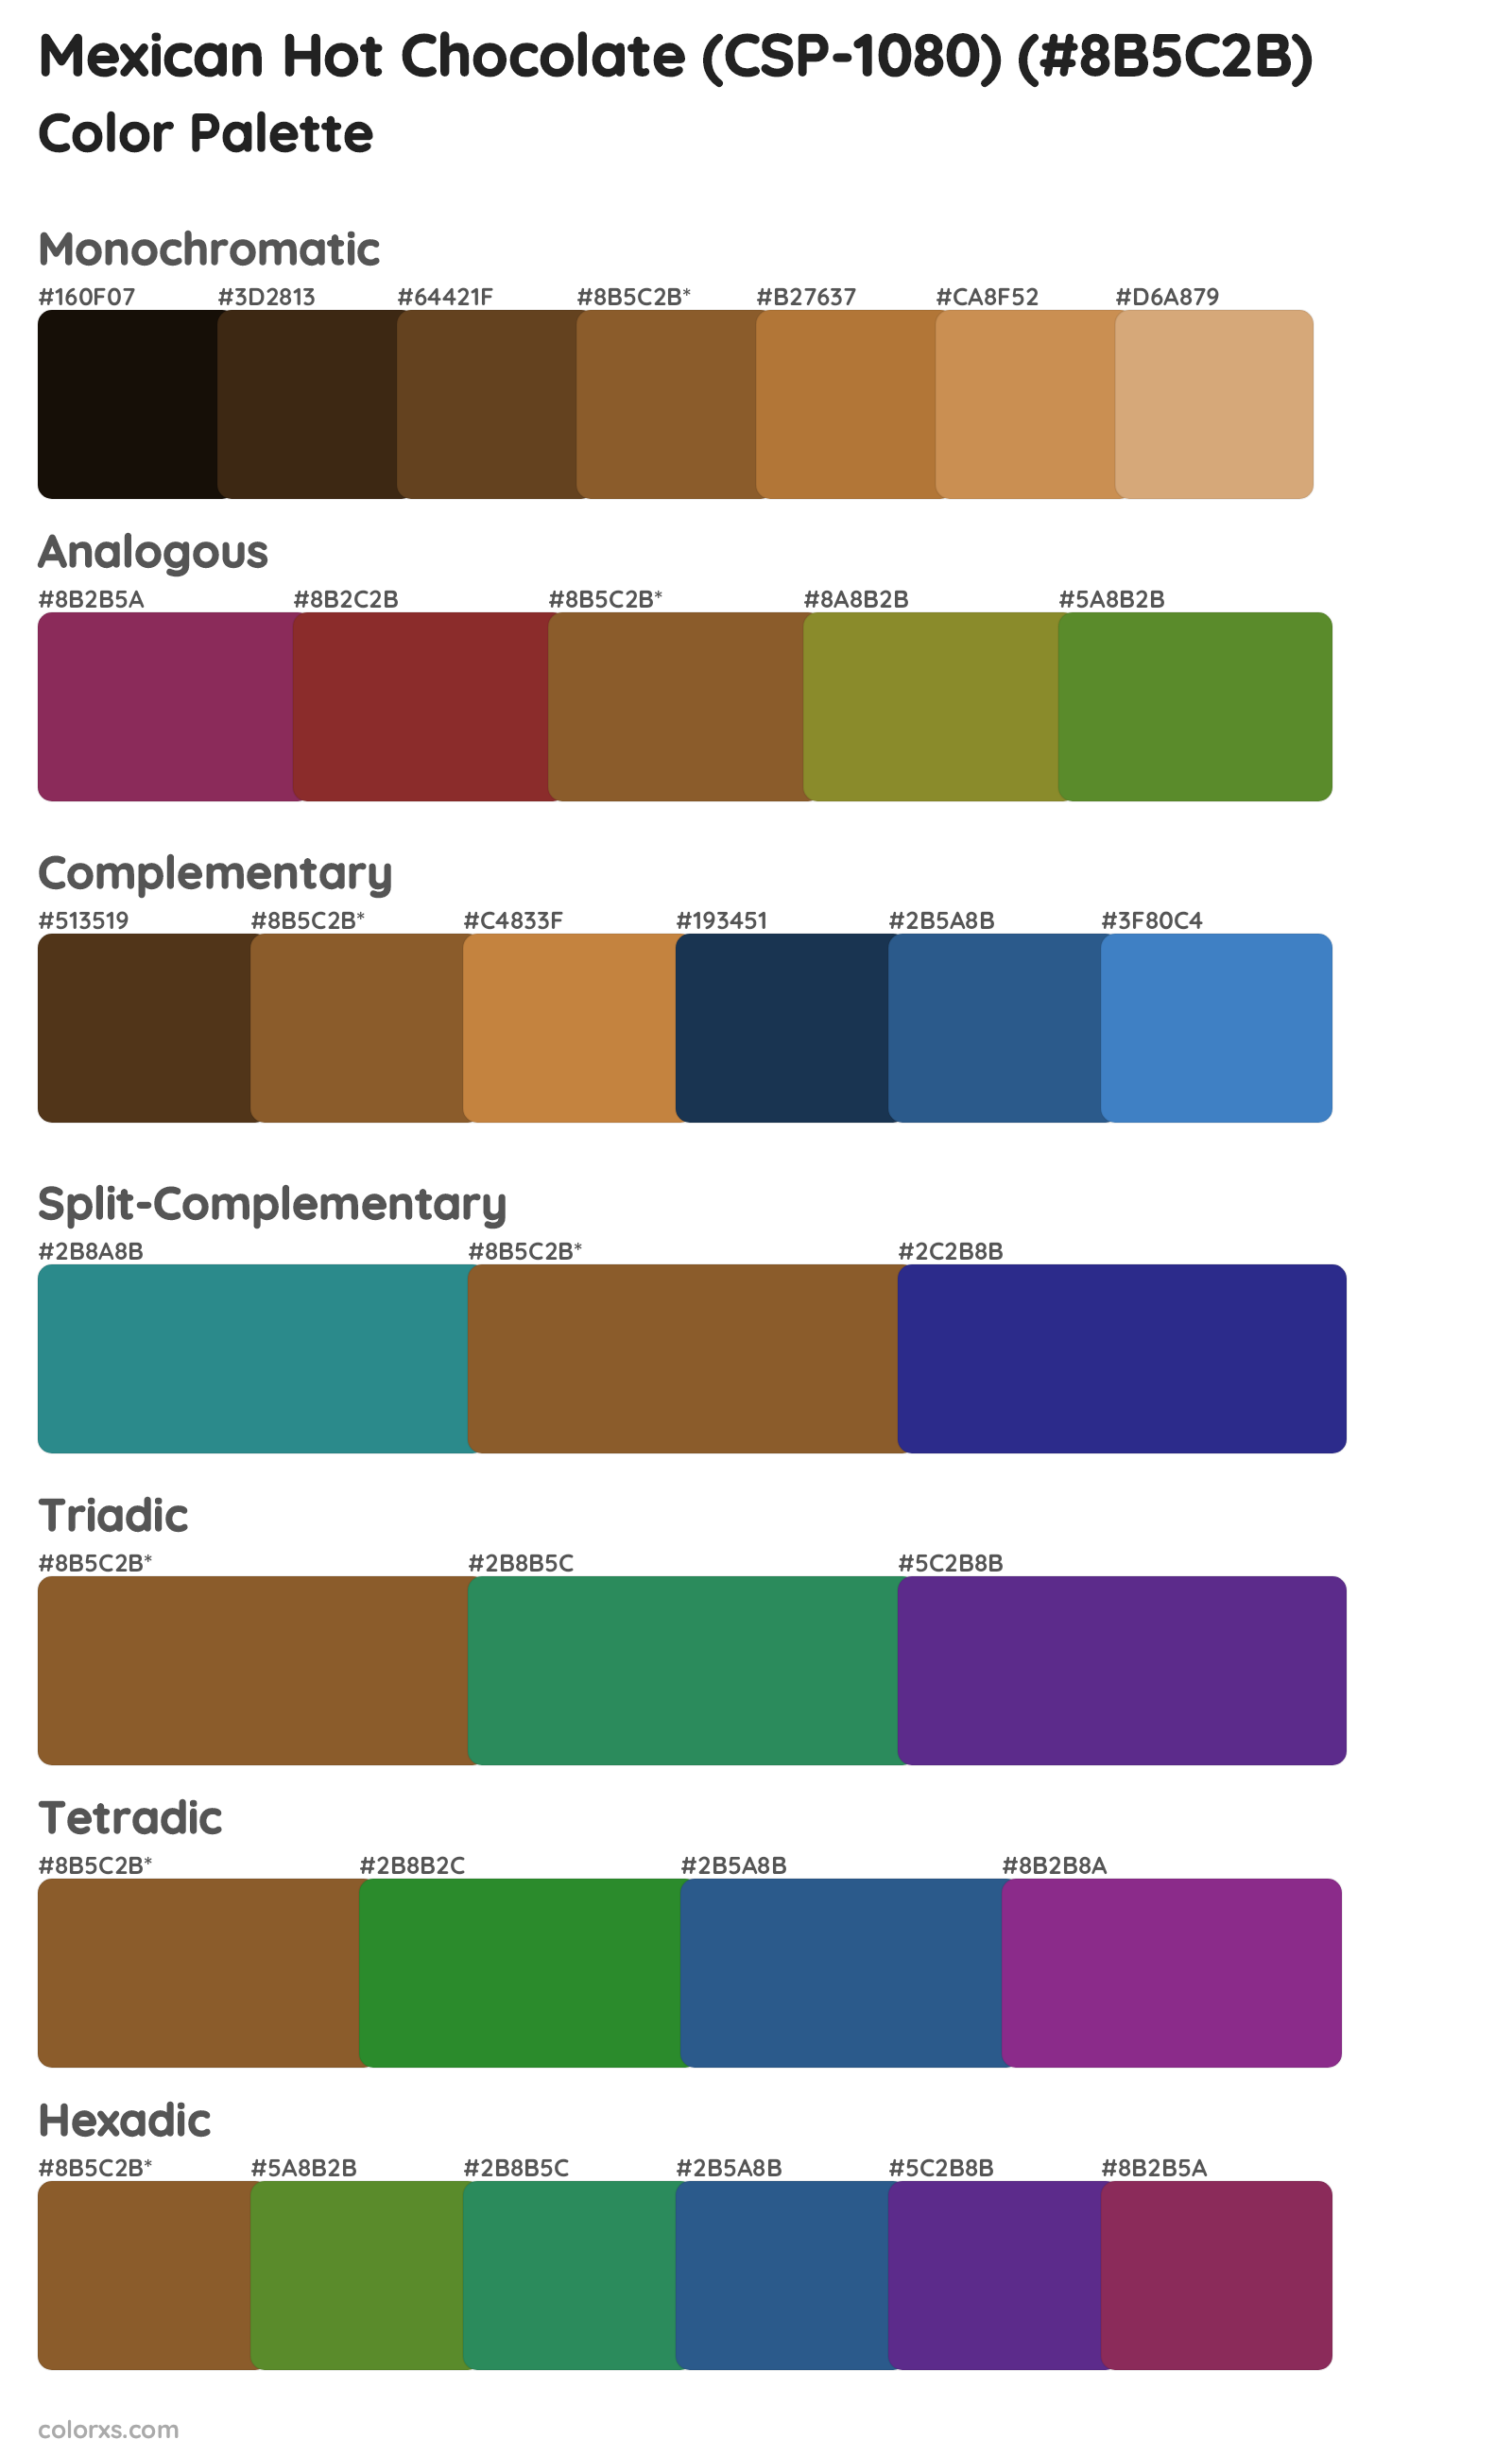 Mexican Hot Chocolate (CSP-1080) Color Scheme Palettes